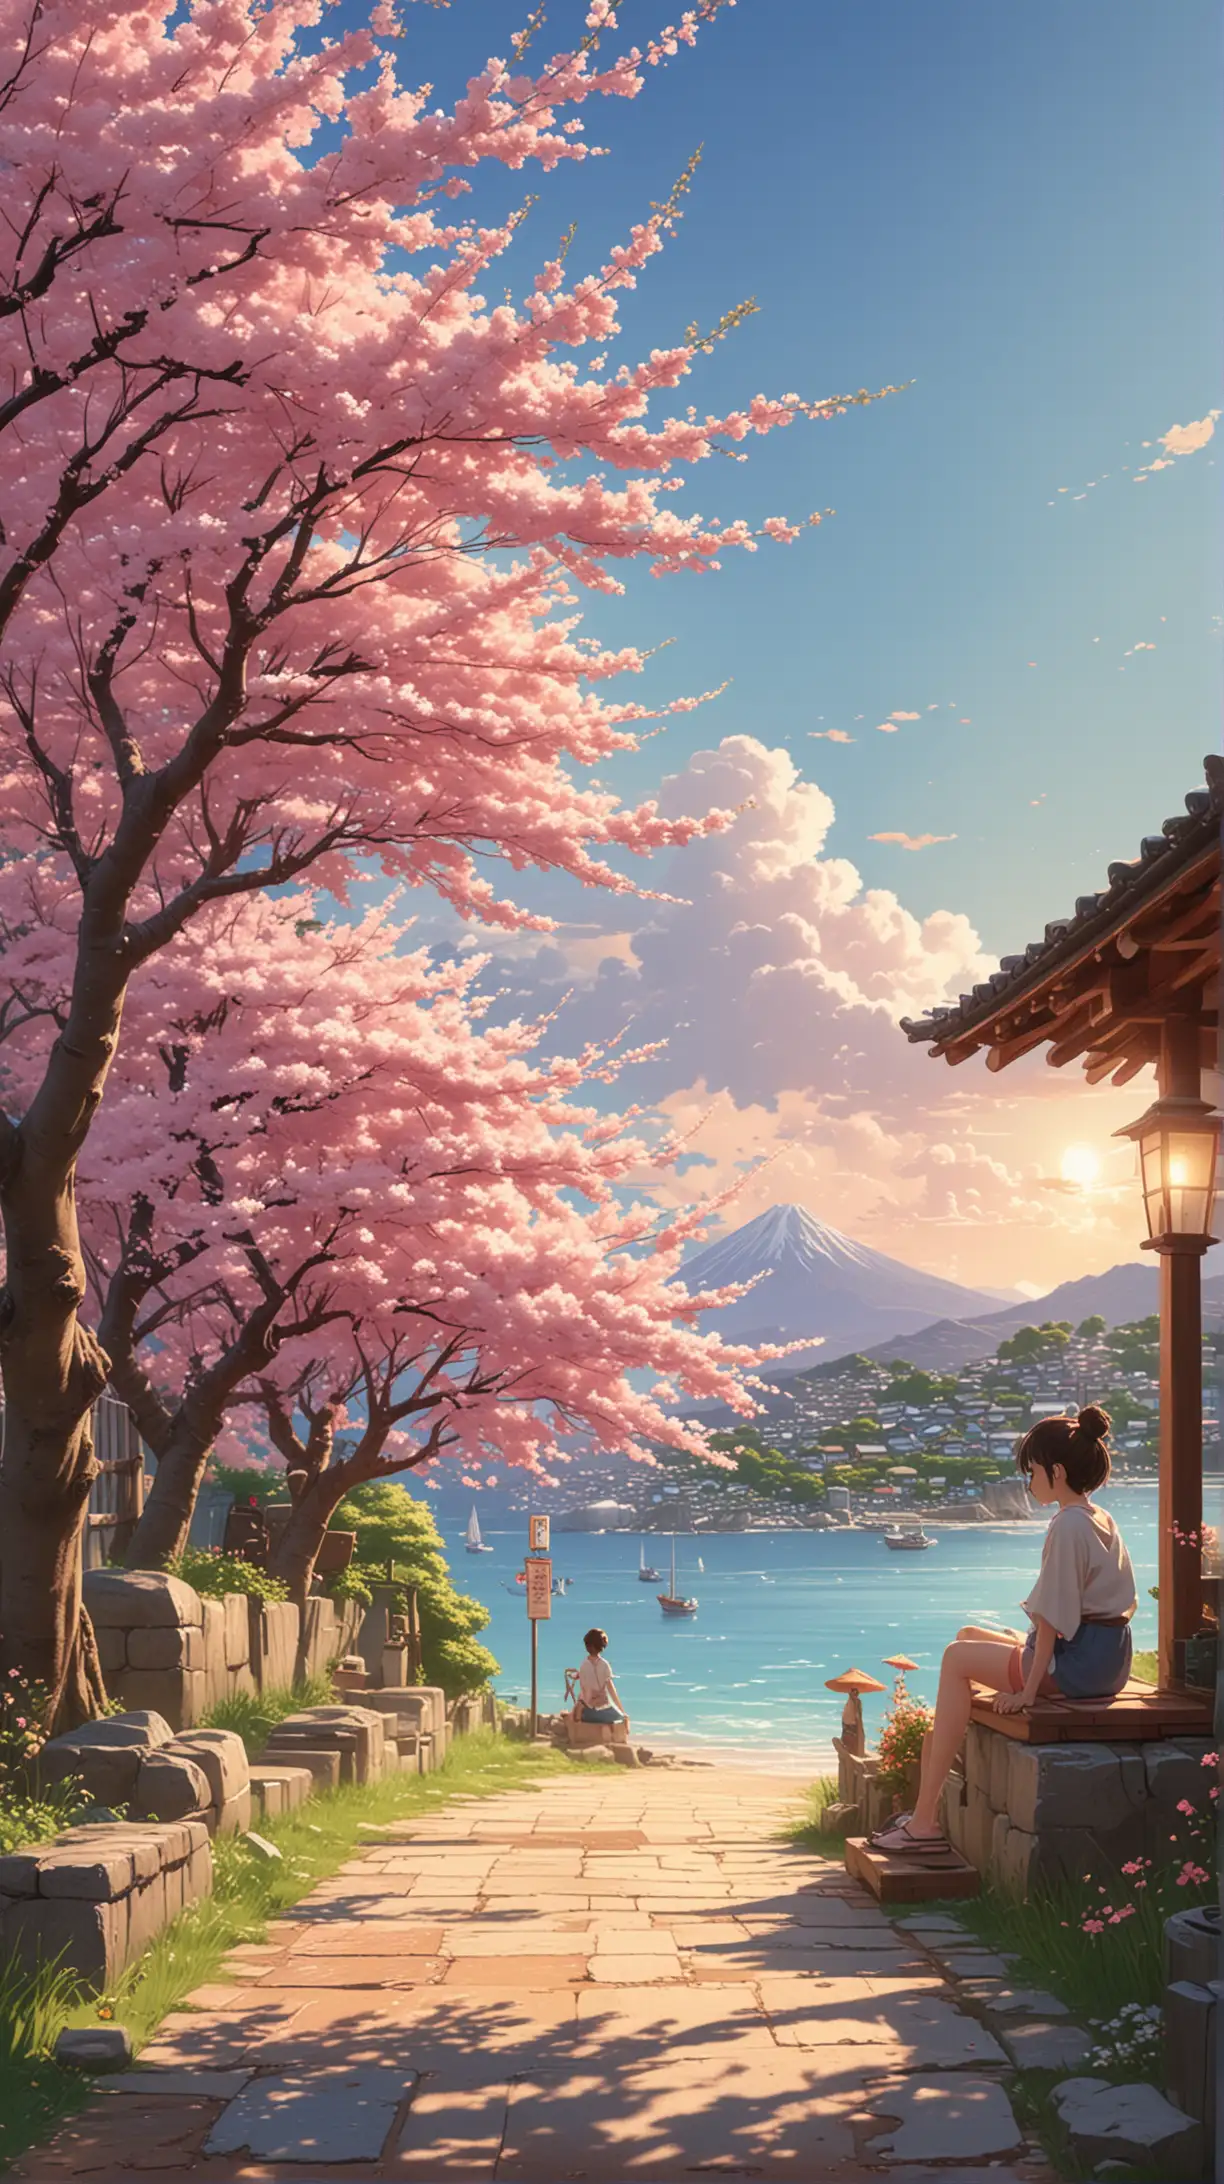 Cozy summer in japan village neighbourhood, beautiful sky, landscape, girl sitting under cherry blossom tree, sea view, 8k render, studio ghibli, makoto shinkai, codex_401 style acrylic palette colors